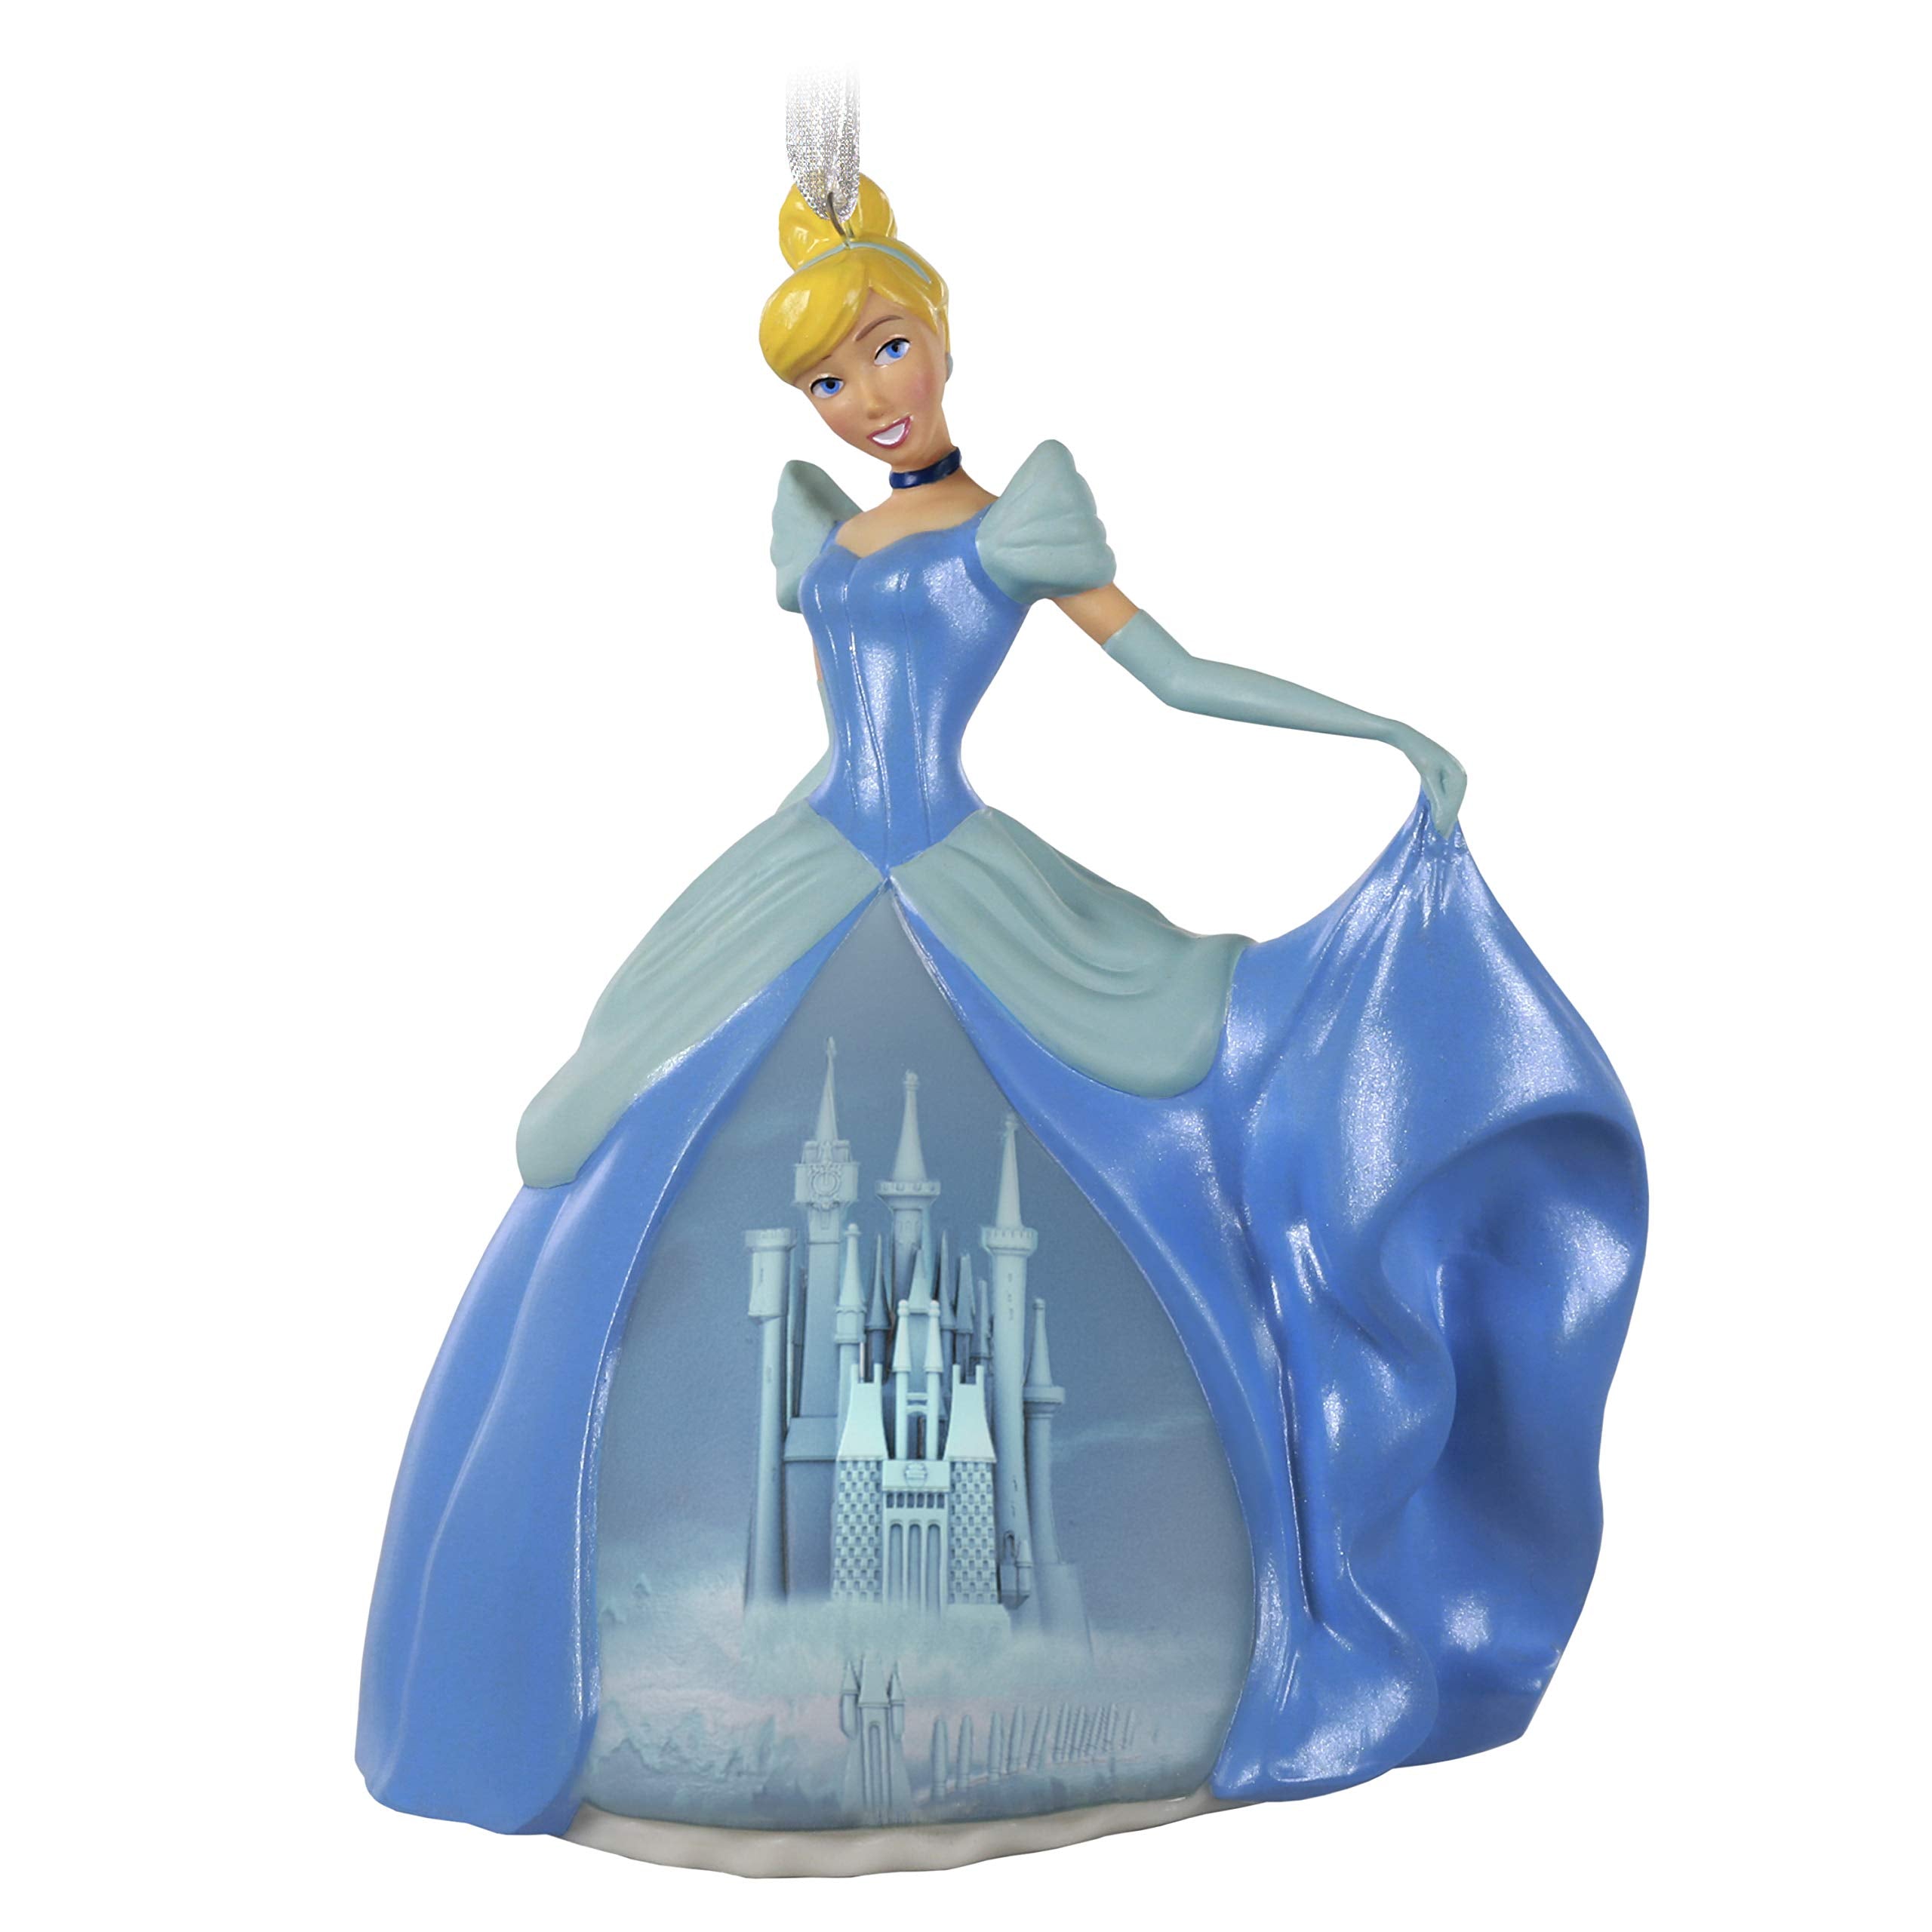 Hallmark Keepsake Christmas Ornament 2020, Disney Princess Celebration Cinderella, Porcelain (2999QK1304)